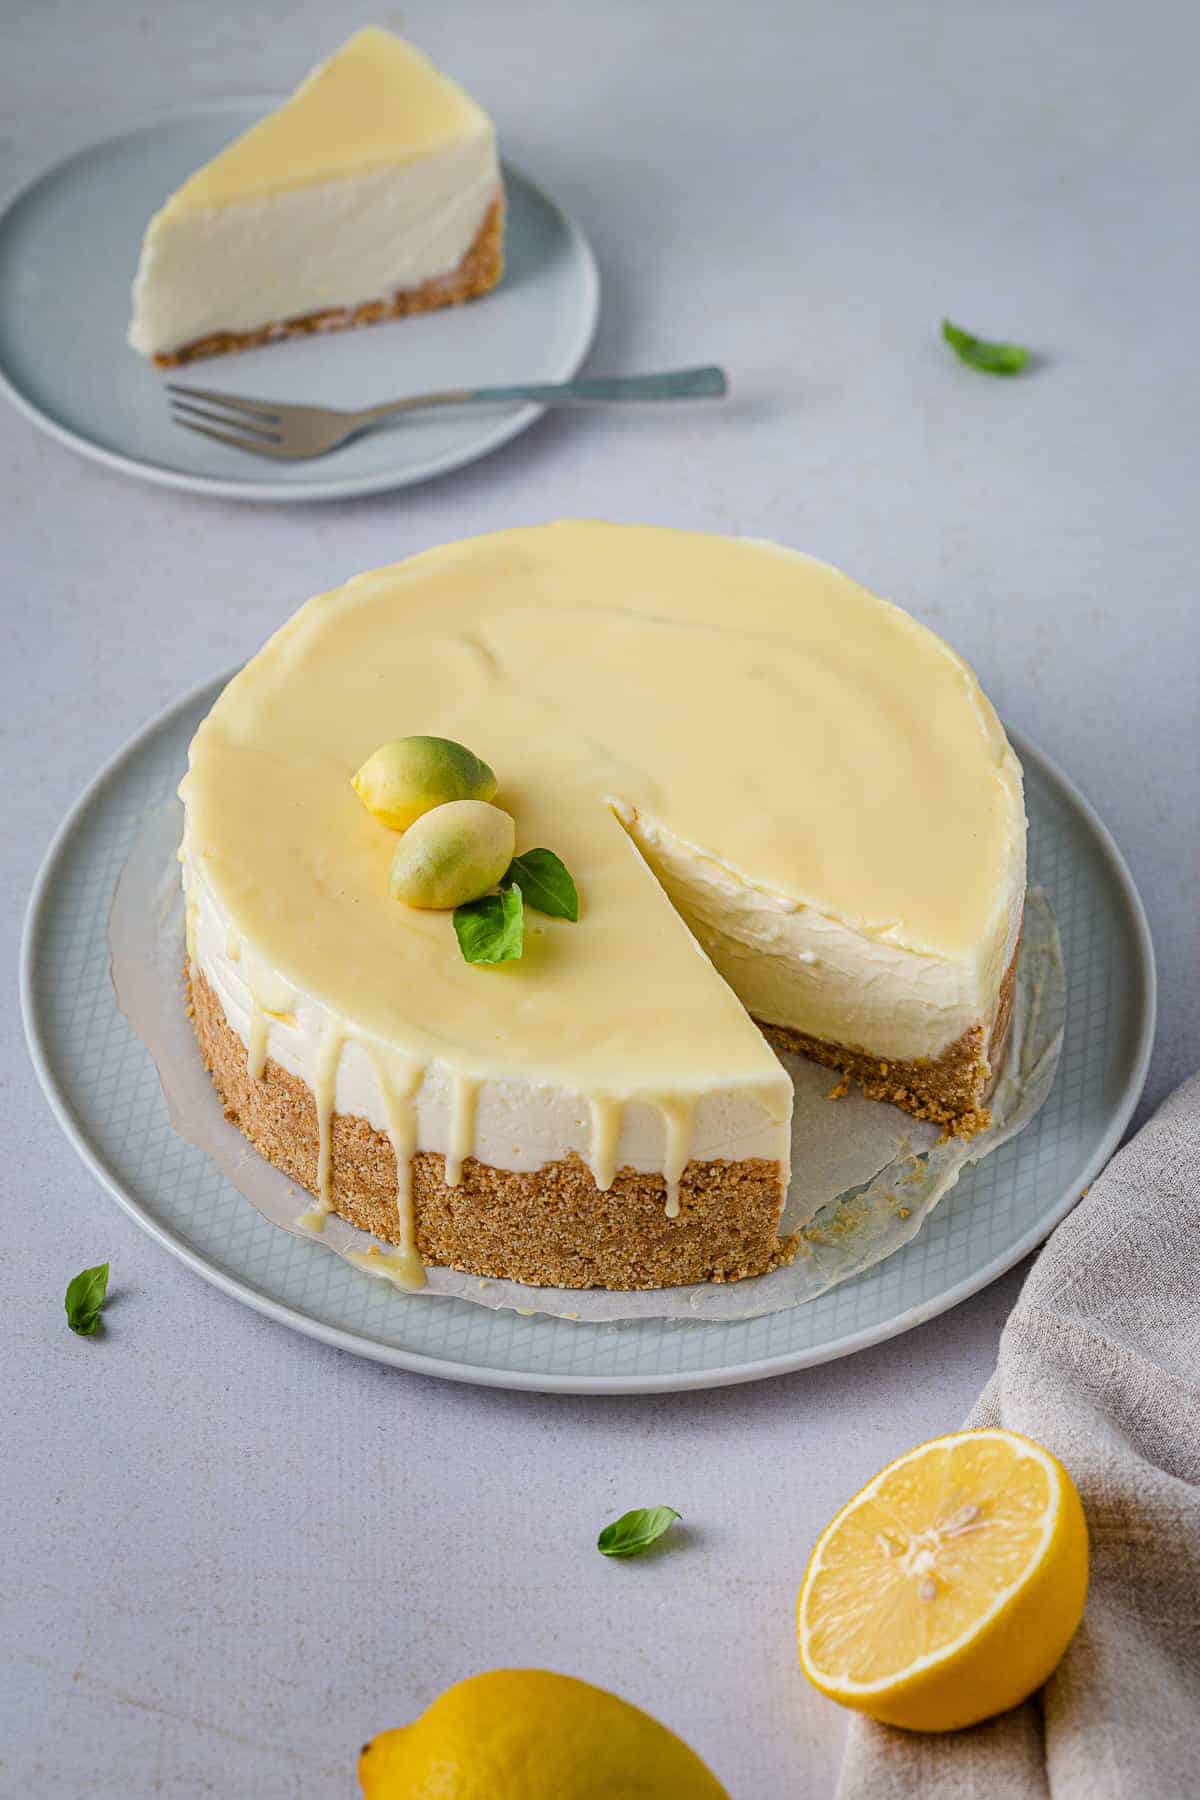 Delicious no-bake lemon cheesecake on a plate